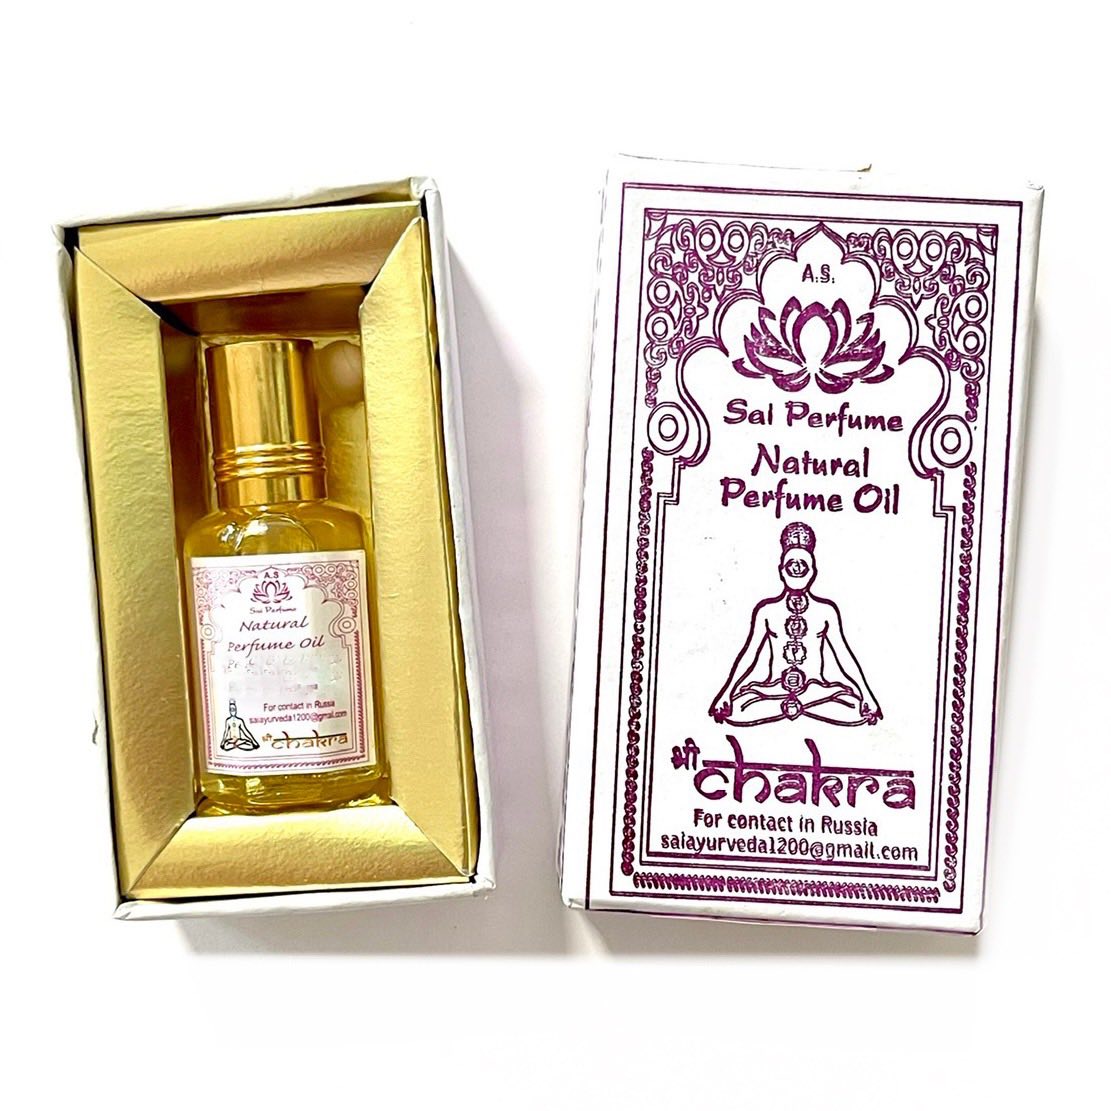 Sai Perfume Natural Oil JANNAT, Shri Chakra (Натуральное парфюмерное масло ДЖАННАТ, Шри Чакра), коробка, 8 мл.